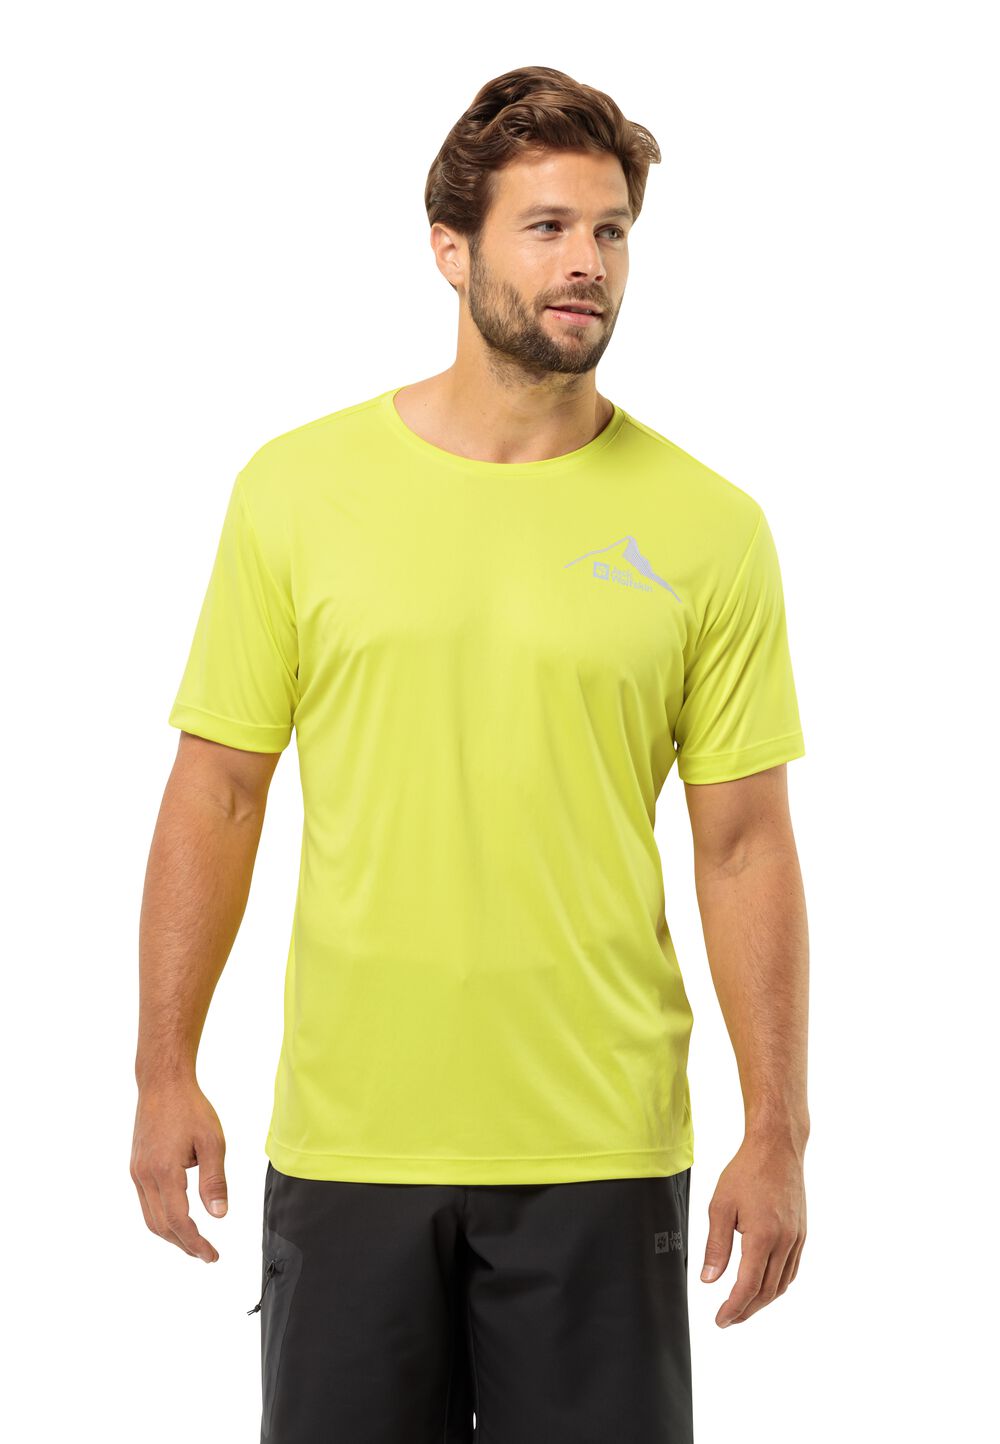 Jack Wolfskin Peak Graphic T-Shirt Men Functioneel shirt Heren M oranje firefly